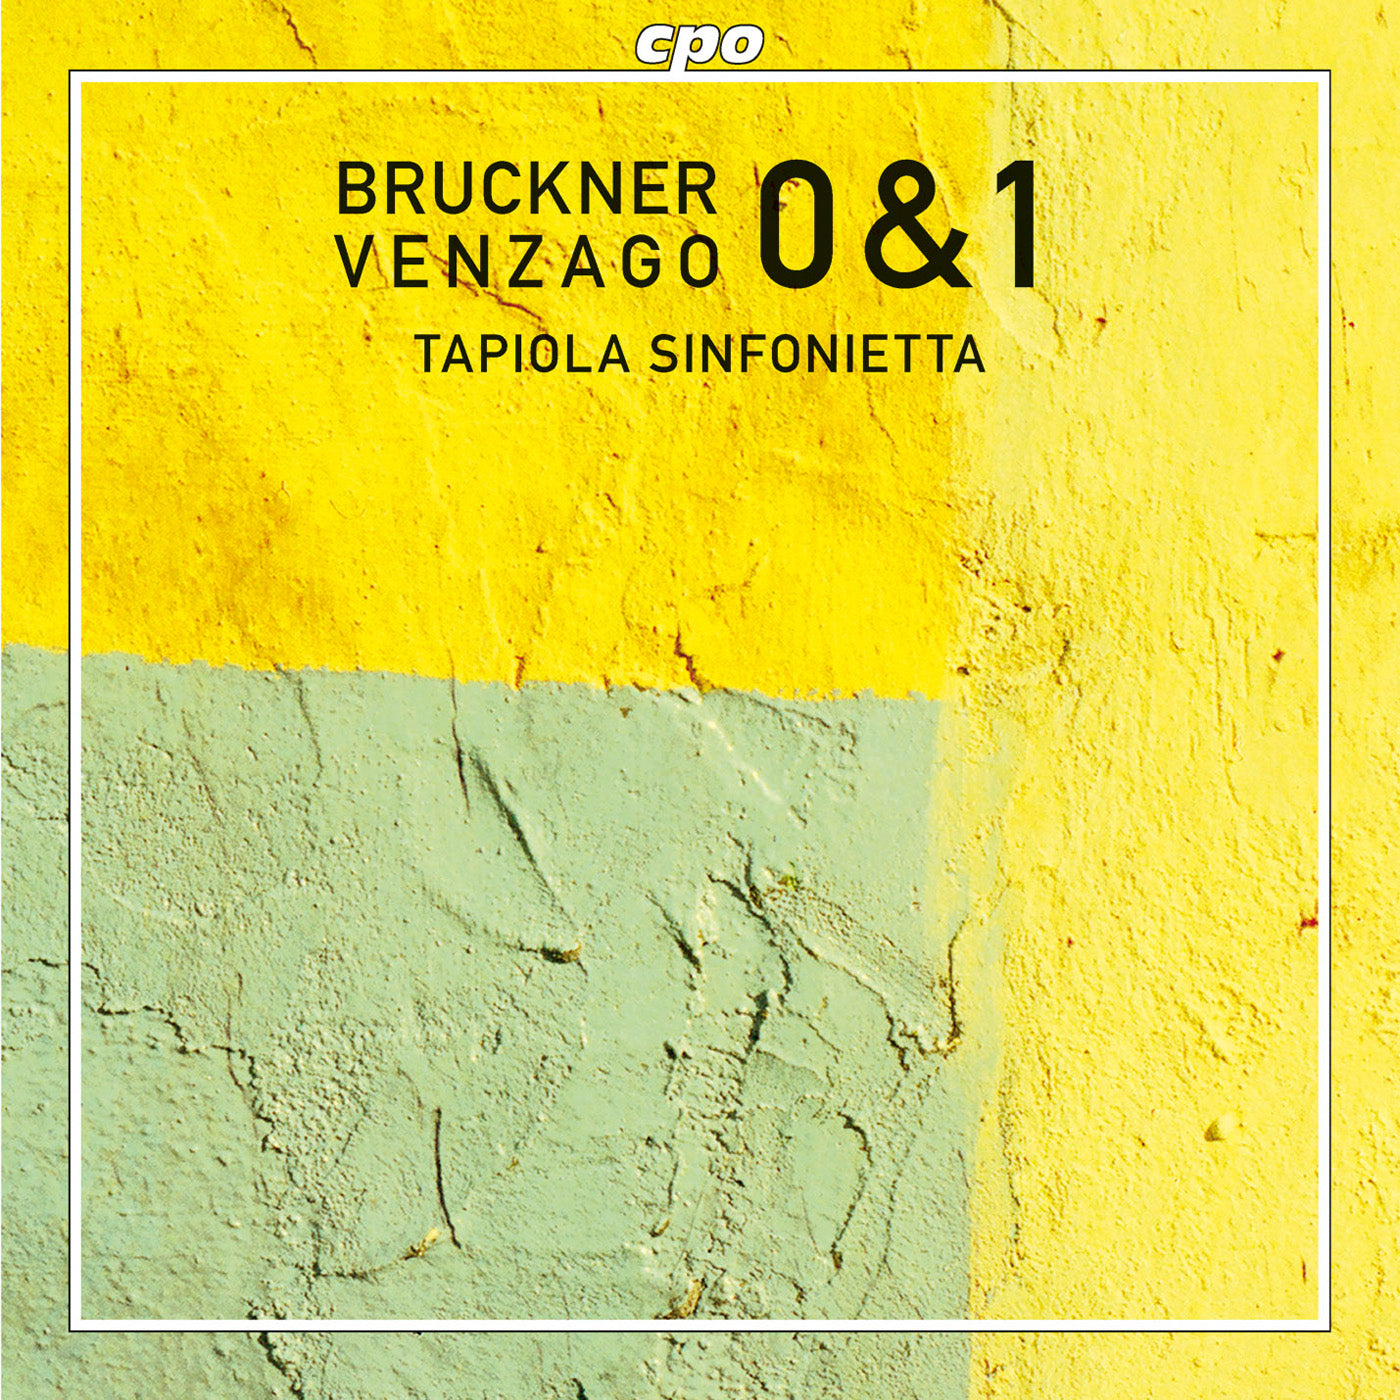 Bruckner: Symphonies Nos. 0 & 1 / Venzago, Tapiola Sinfonietta